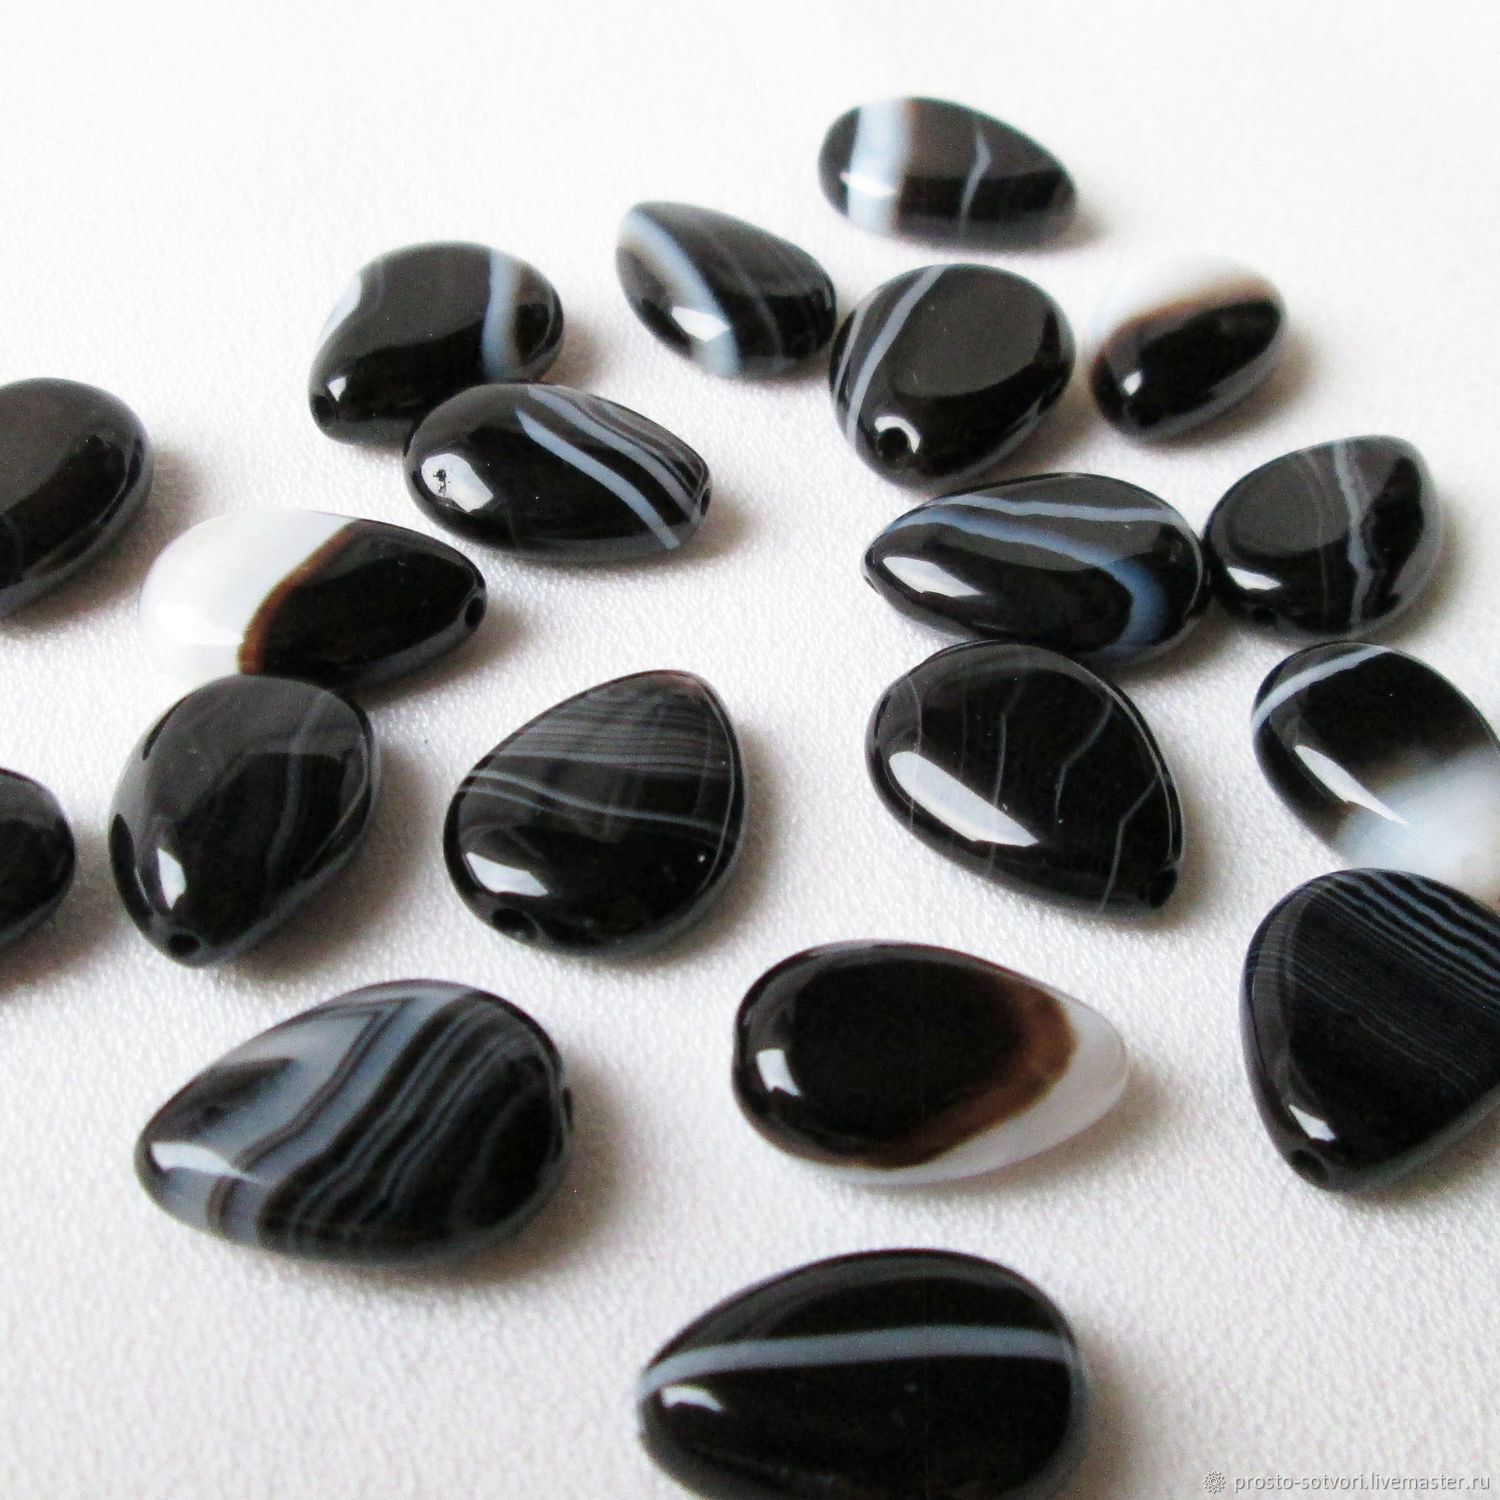 black agate beads